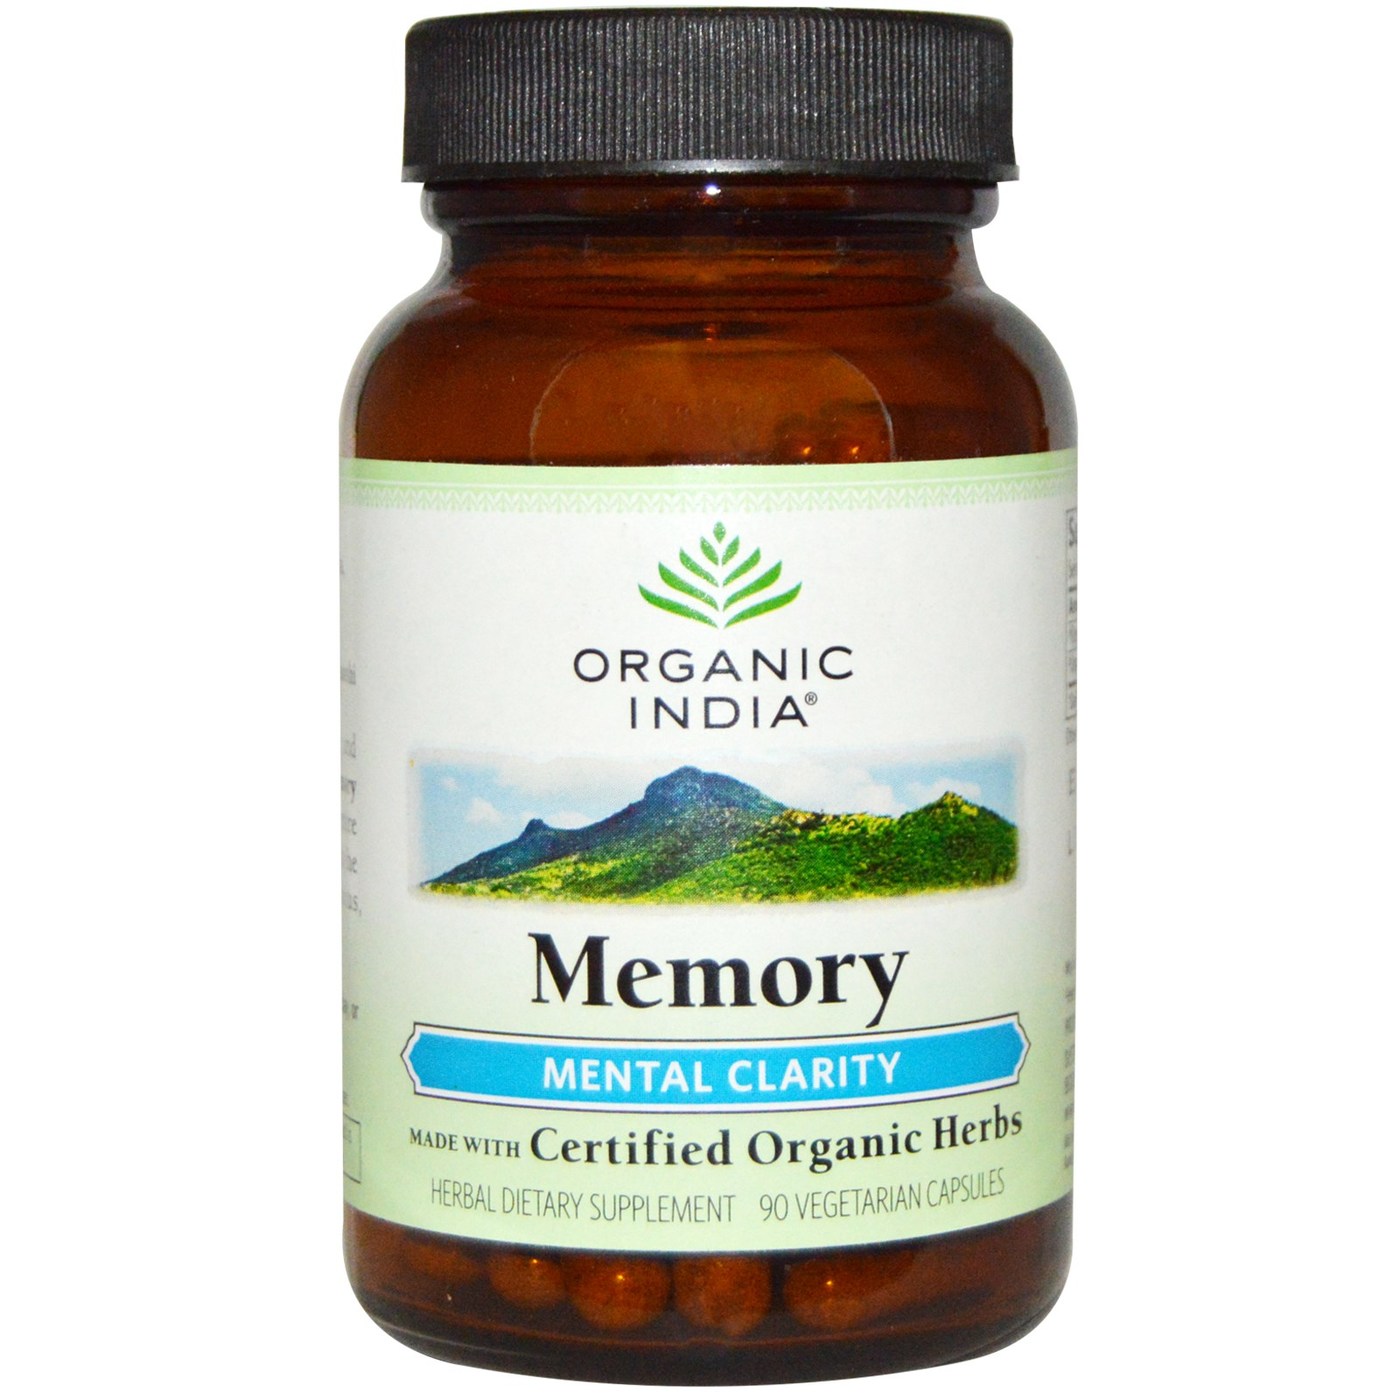 Organic India Memory Mental Clarity - 90 VCapsules - eVitamins.com